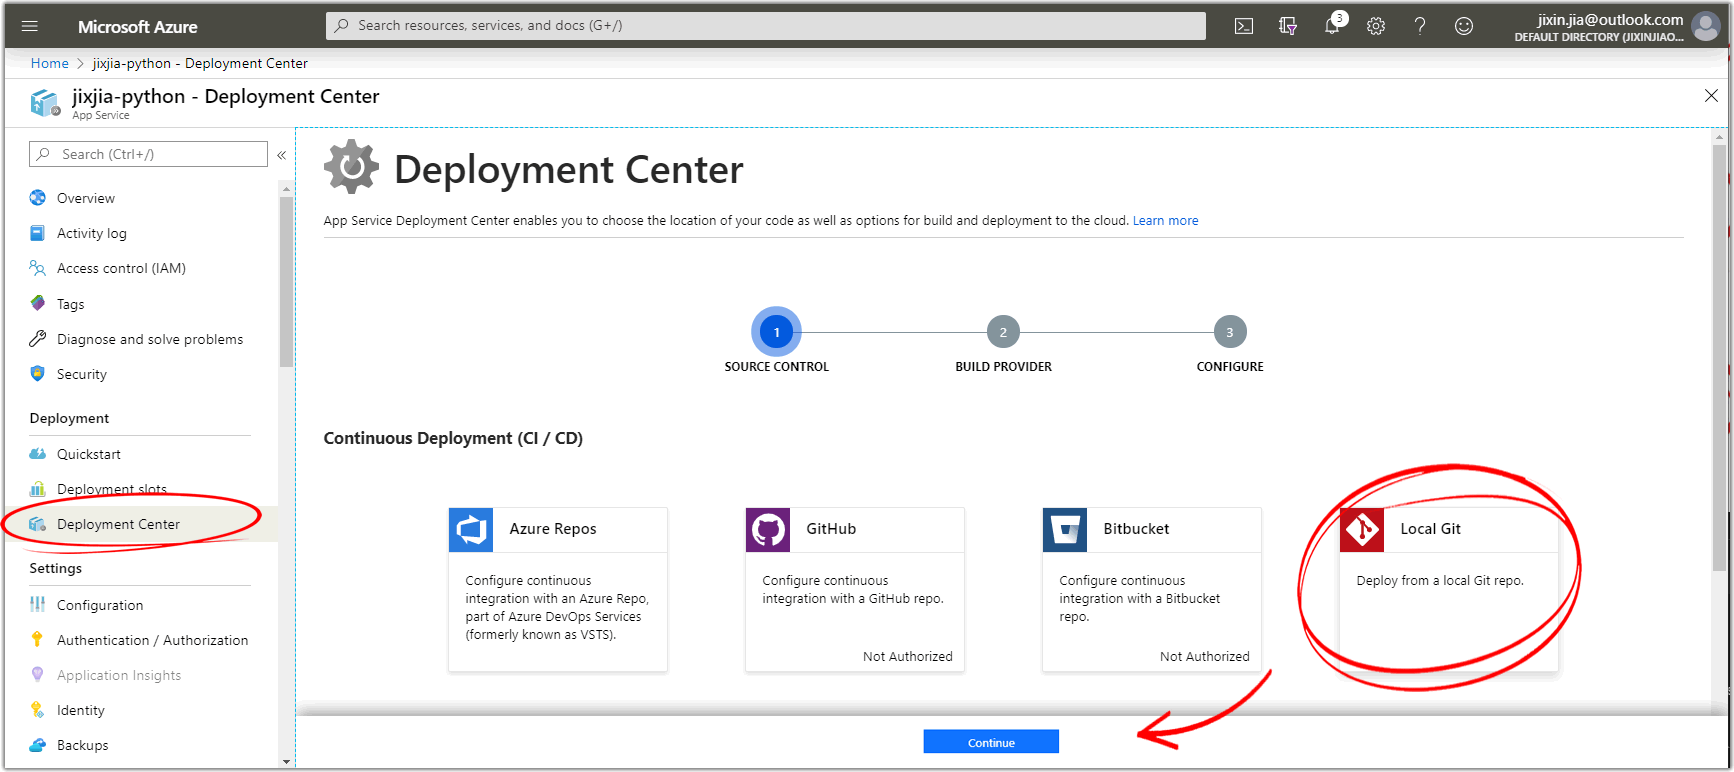 (选择Deployment Center > Local Git > App Service Build Service)